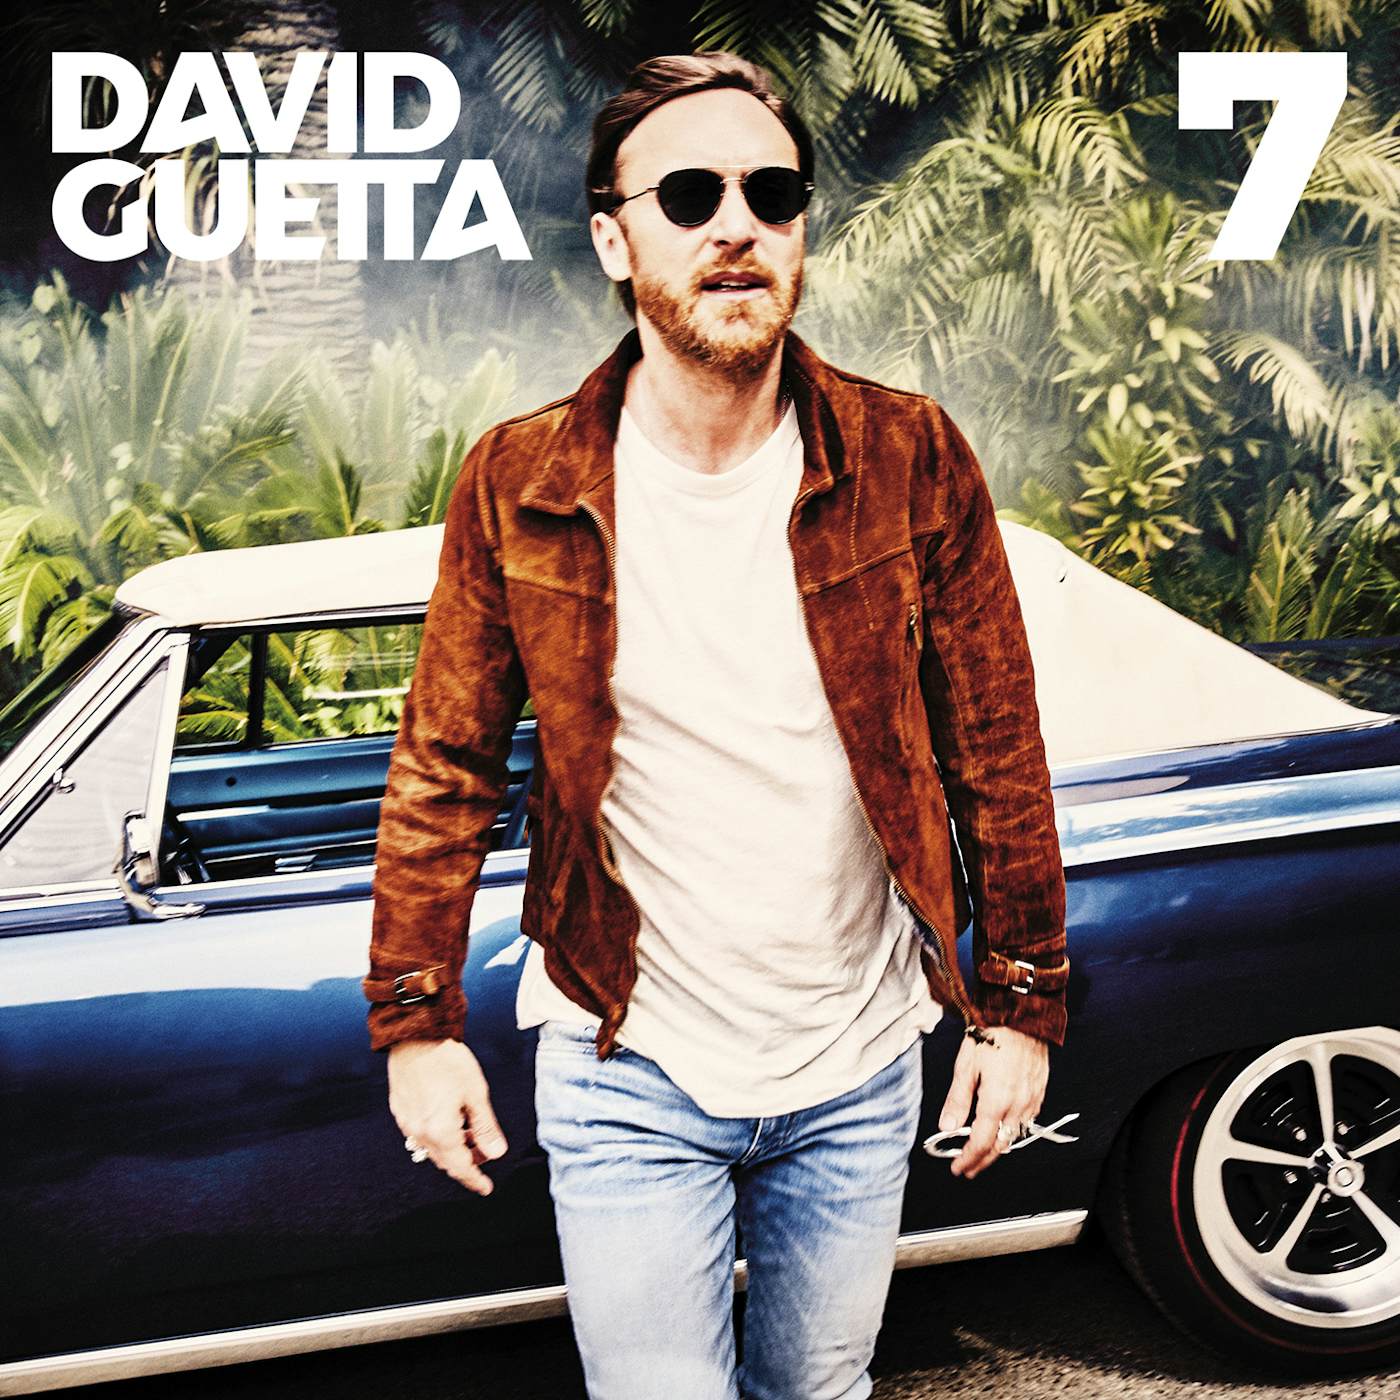 David Guetta 7 Vinyl Record